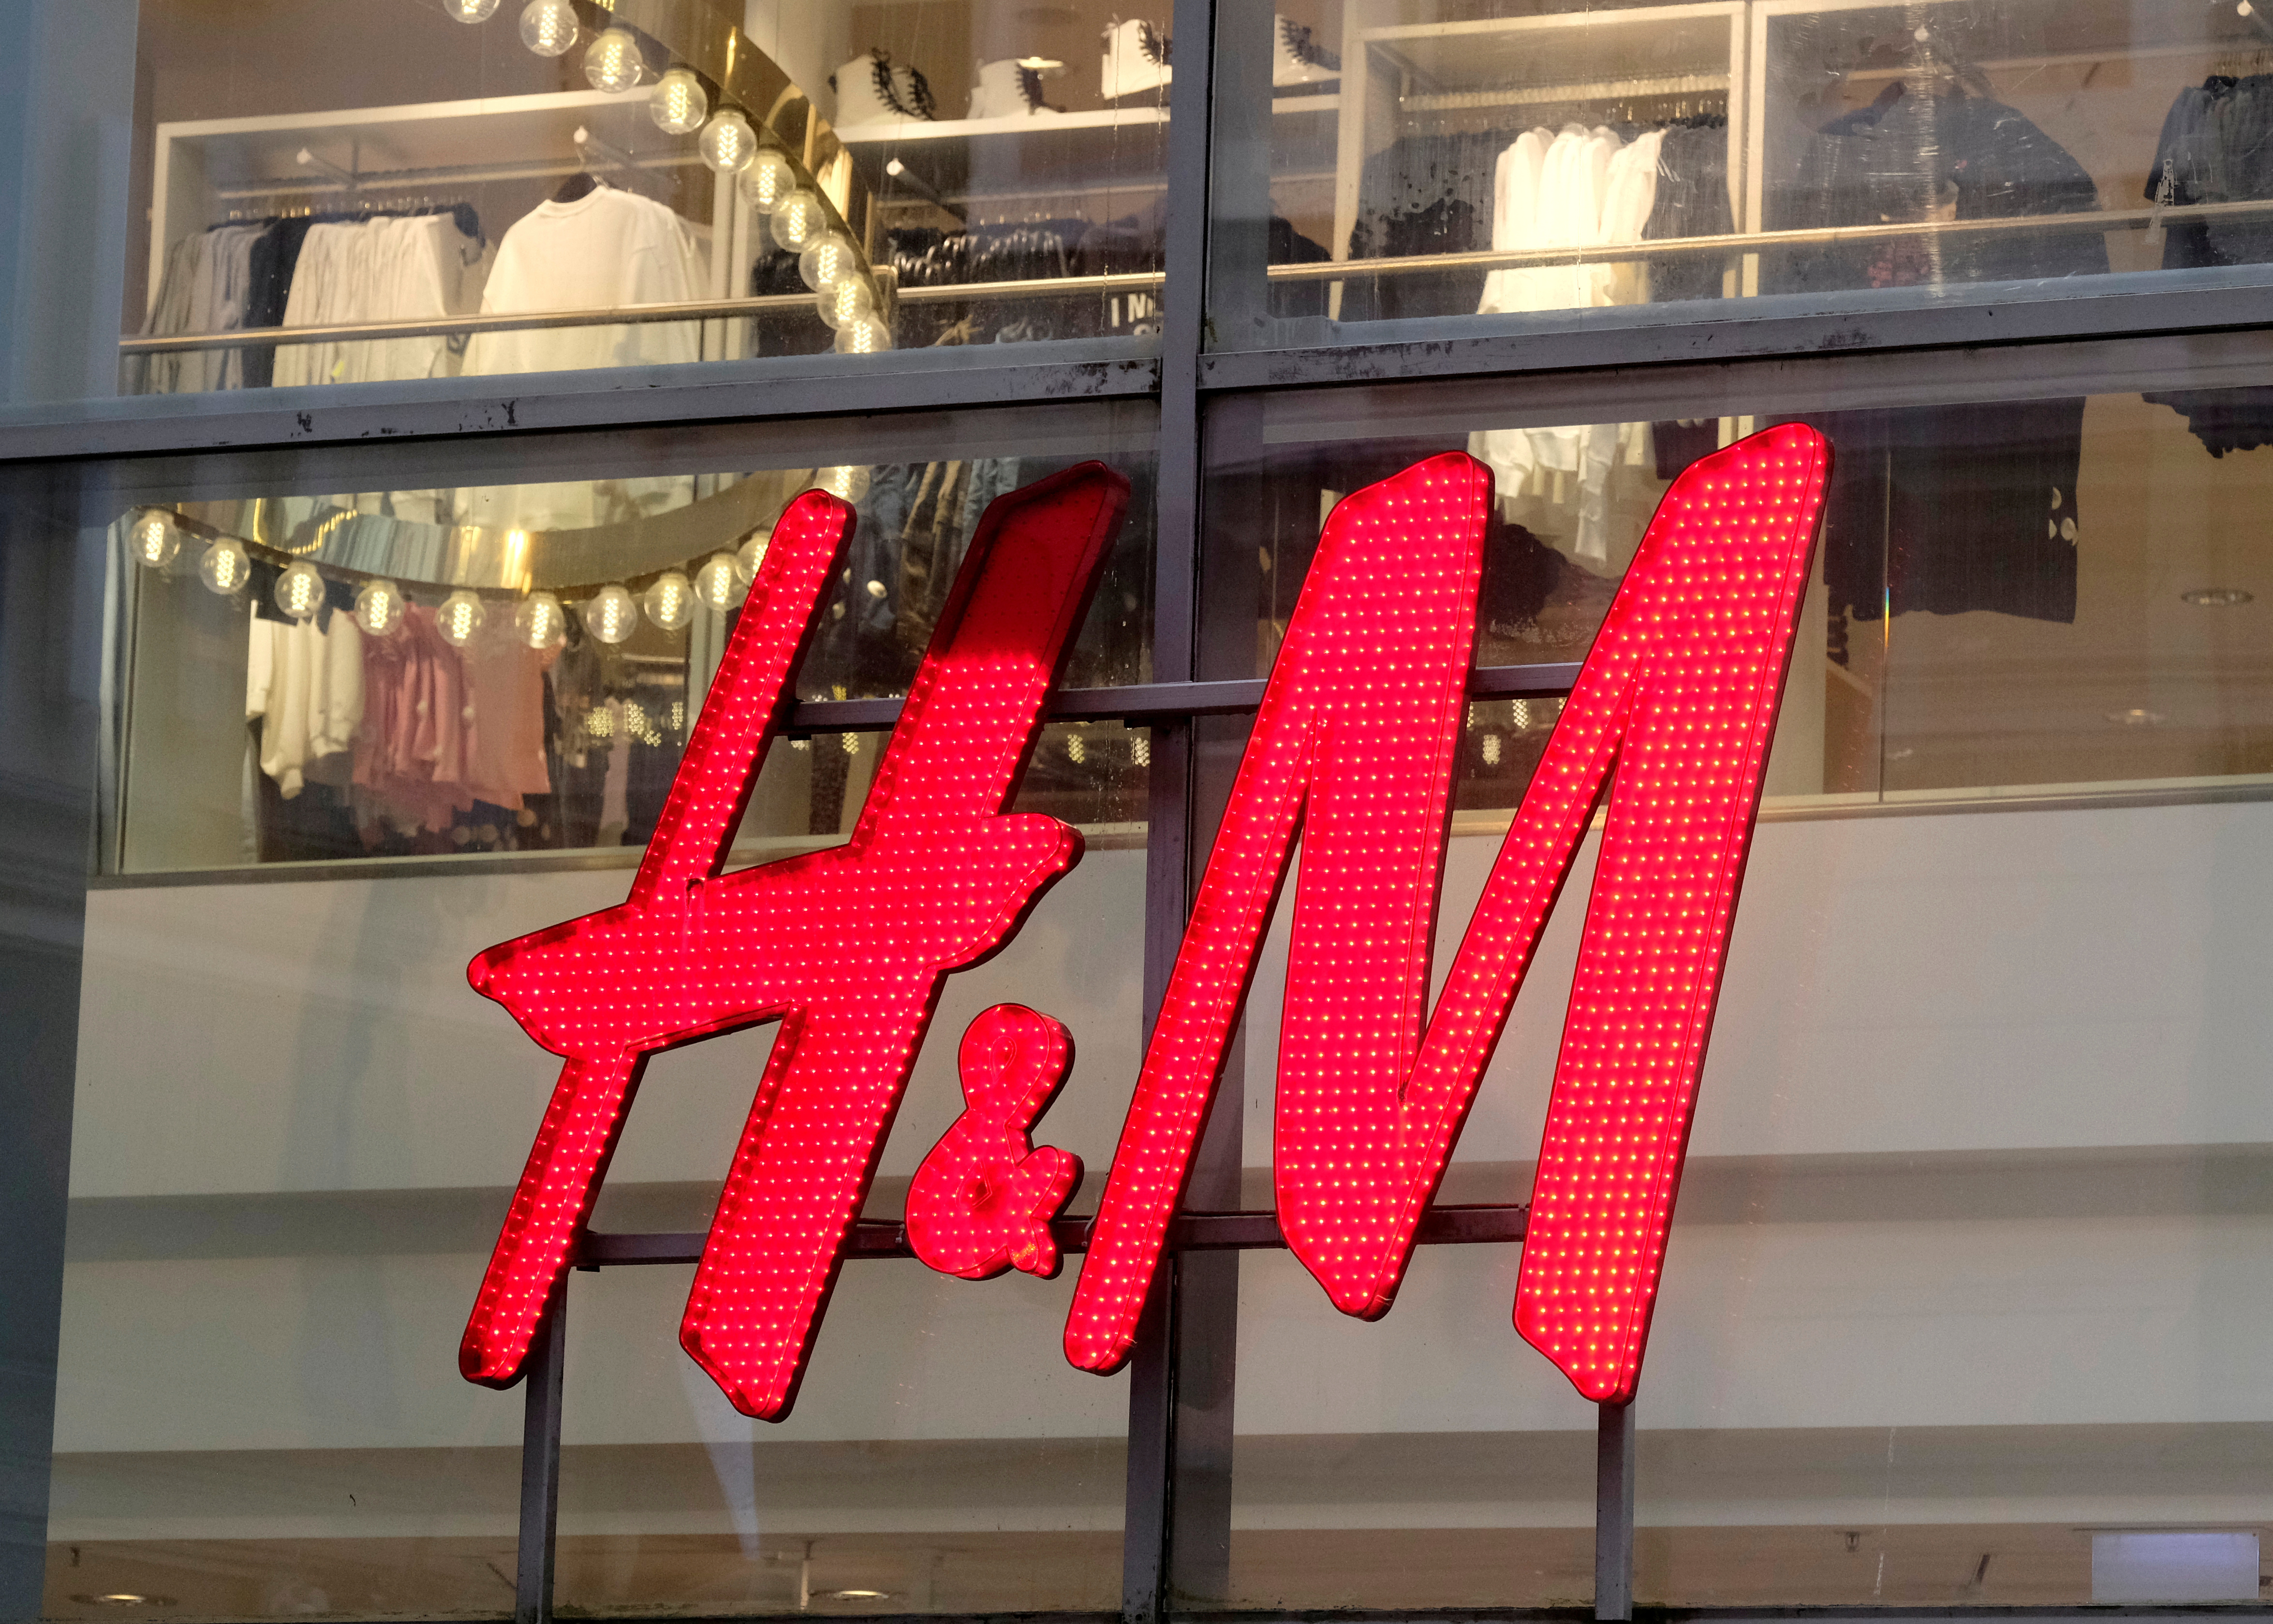 H&M sales soar but shares slip on wider Ukraine impact concern